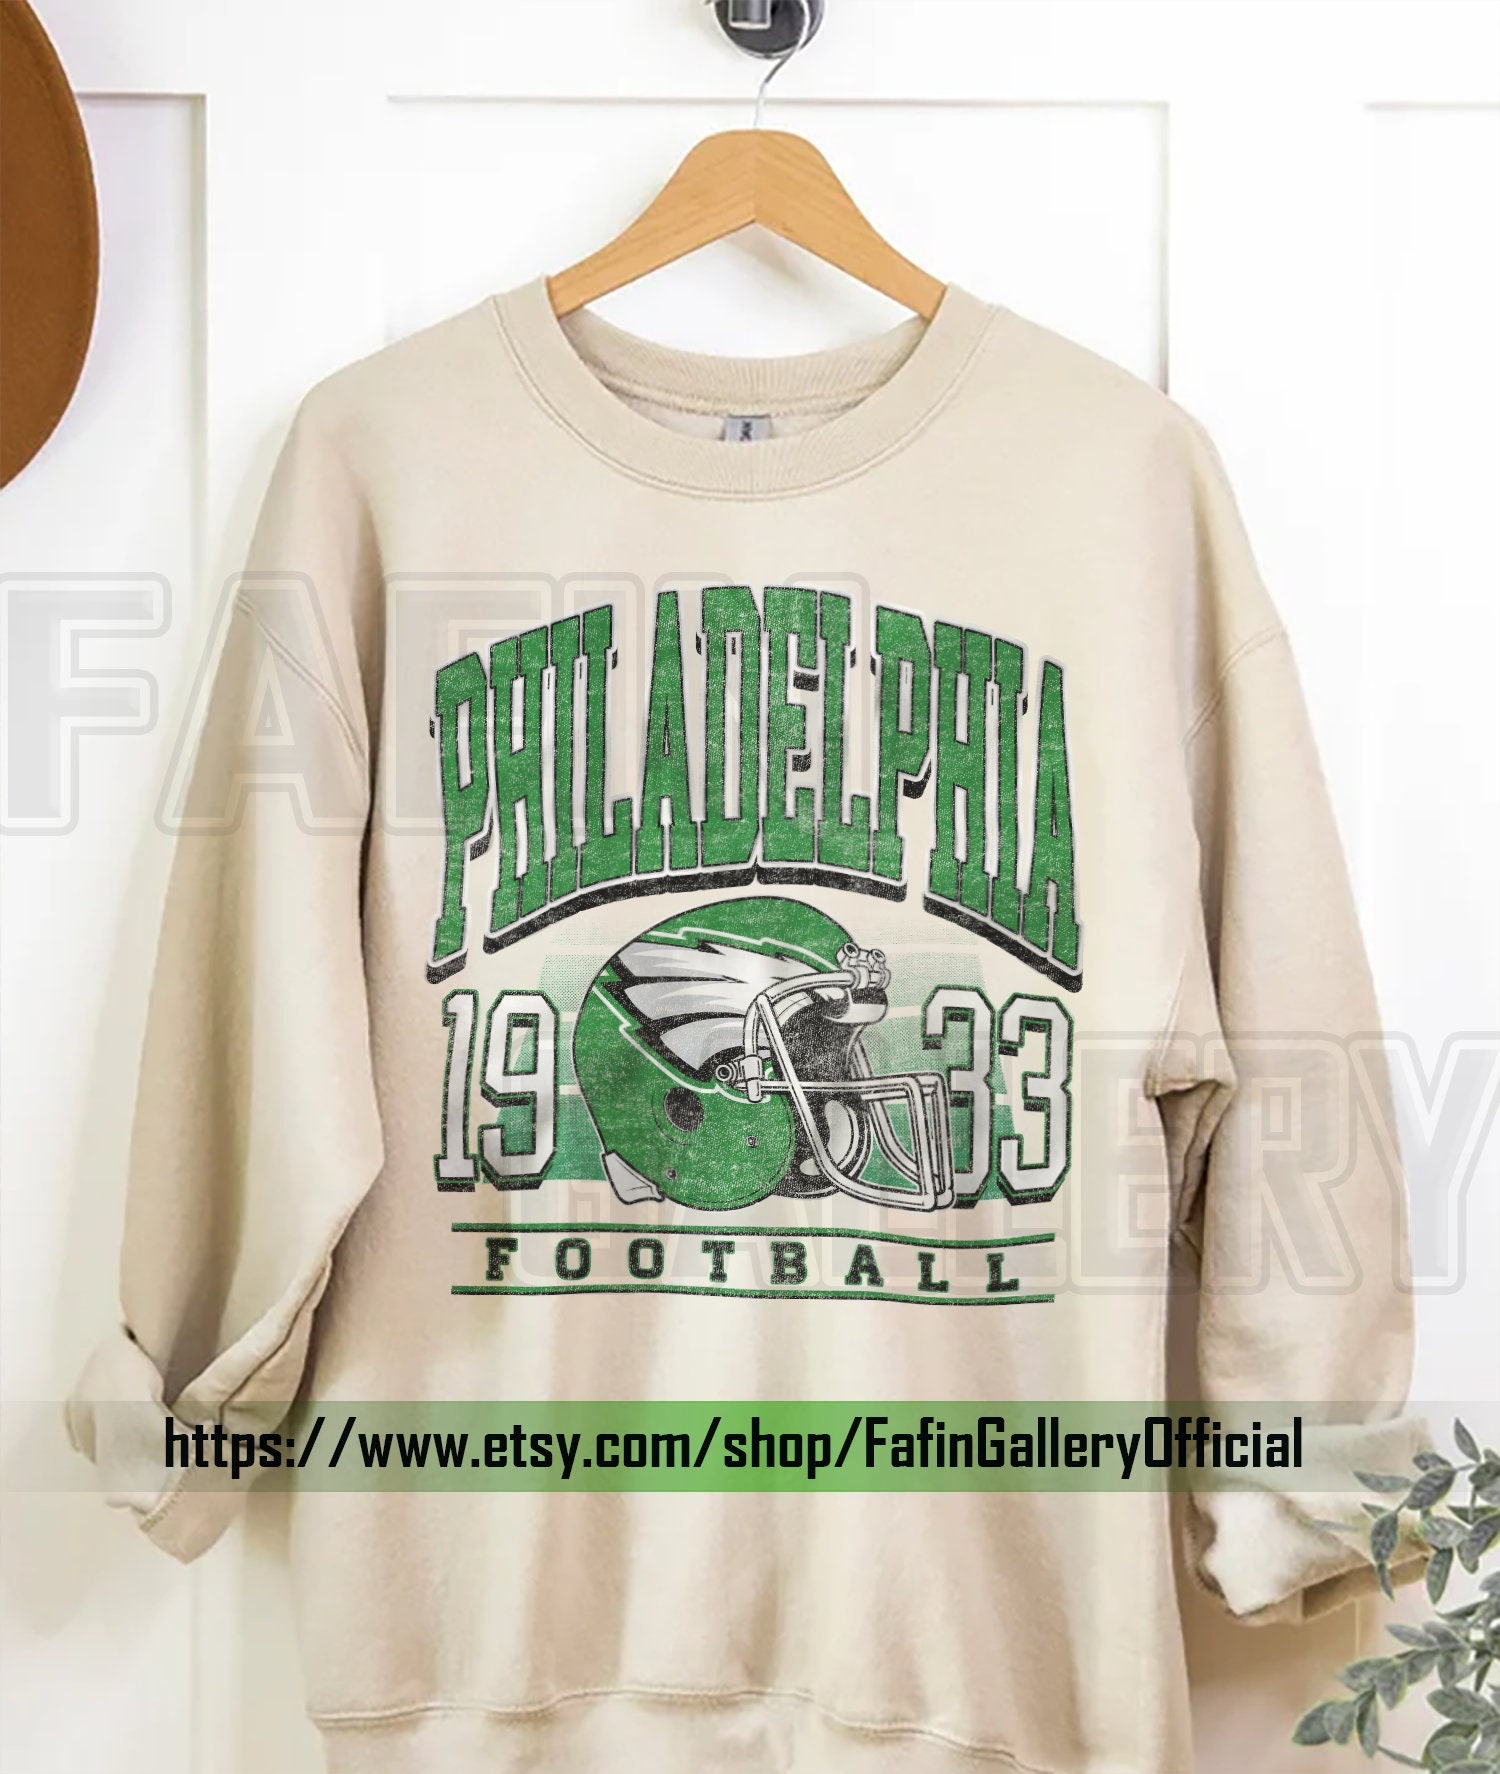 Philadelphia Eagles Sweatshirt Vintage -  Canada